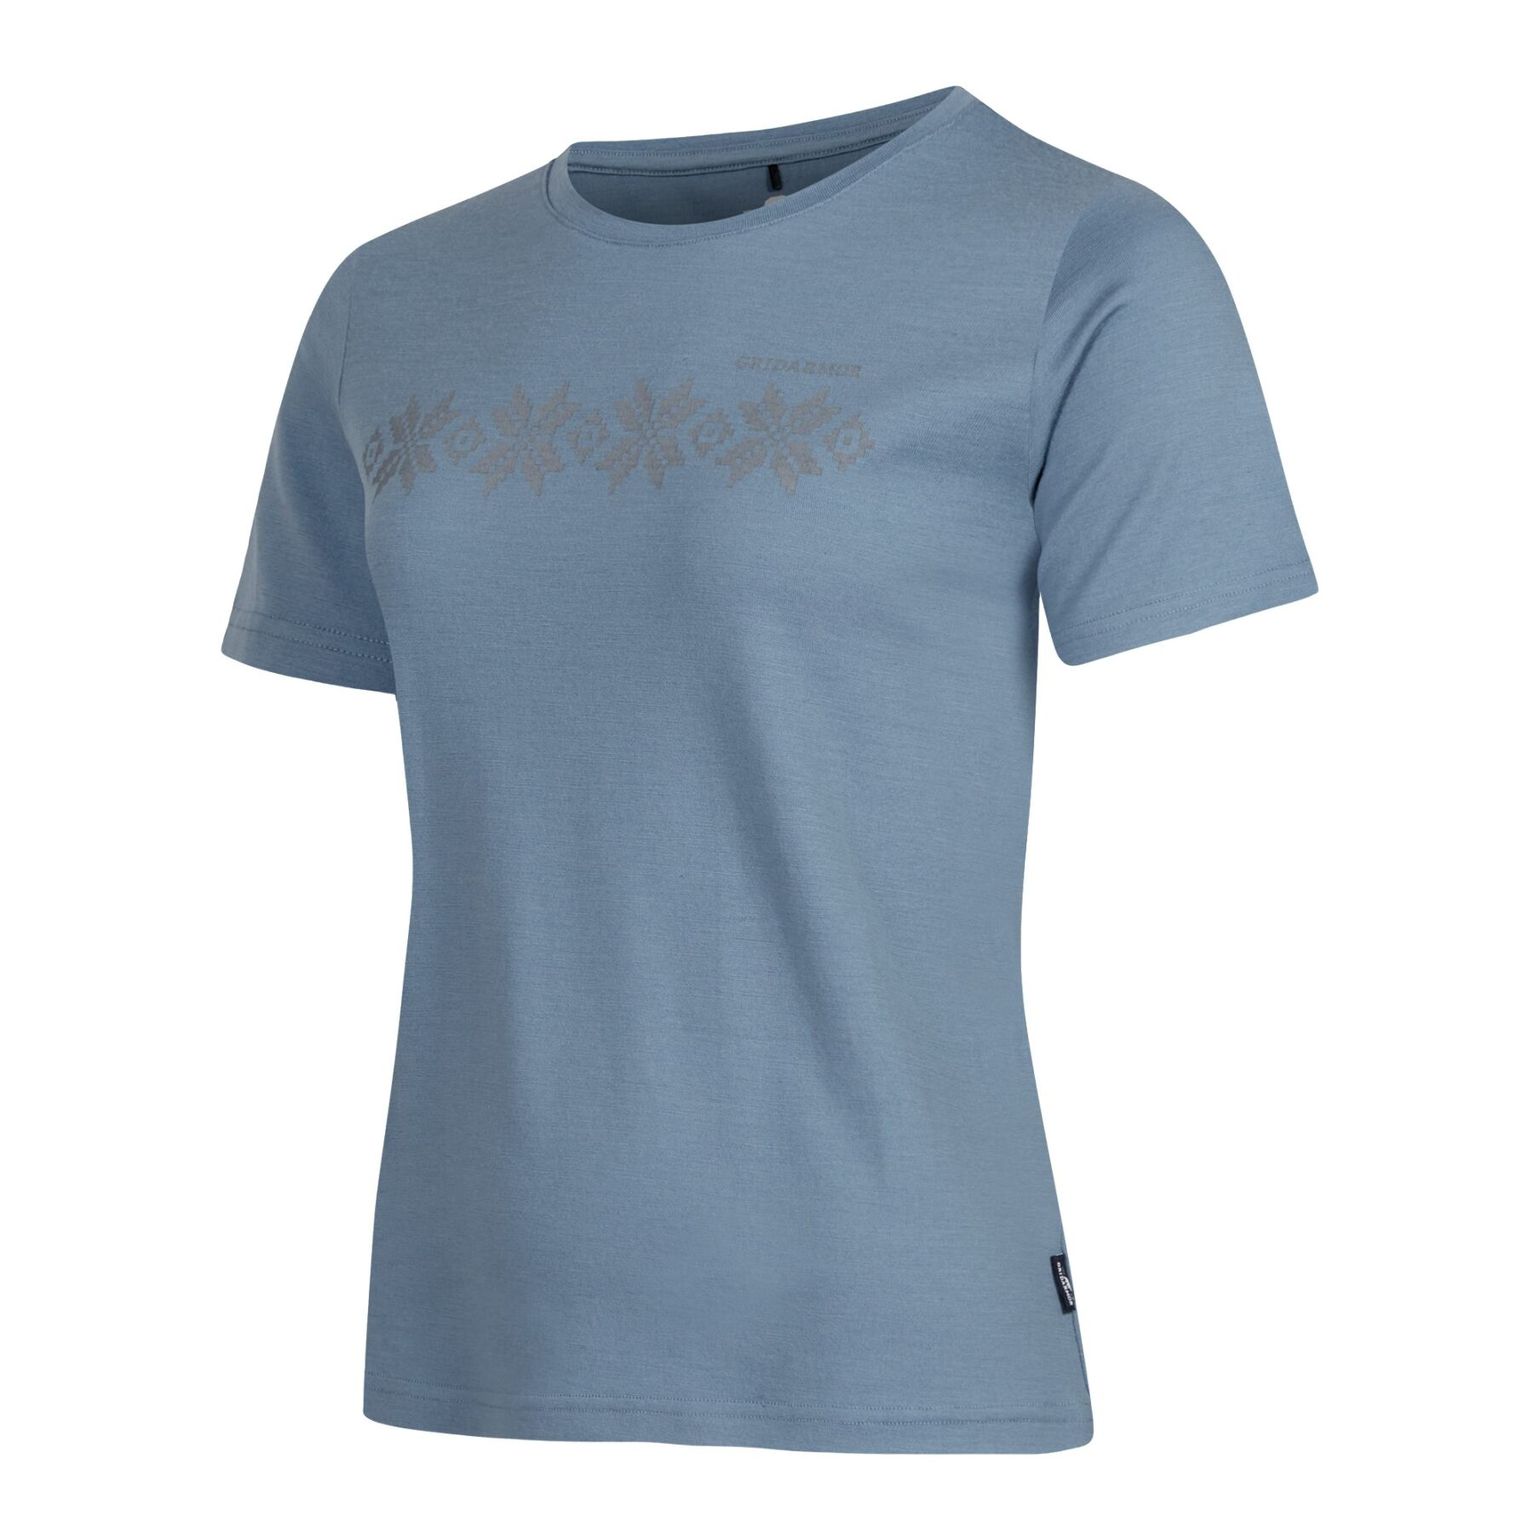 Gridarmor Women's Larsnes Merino T-Shirt Blue Shadow